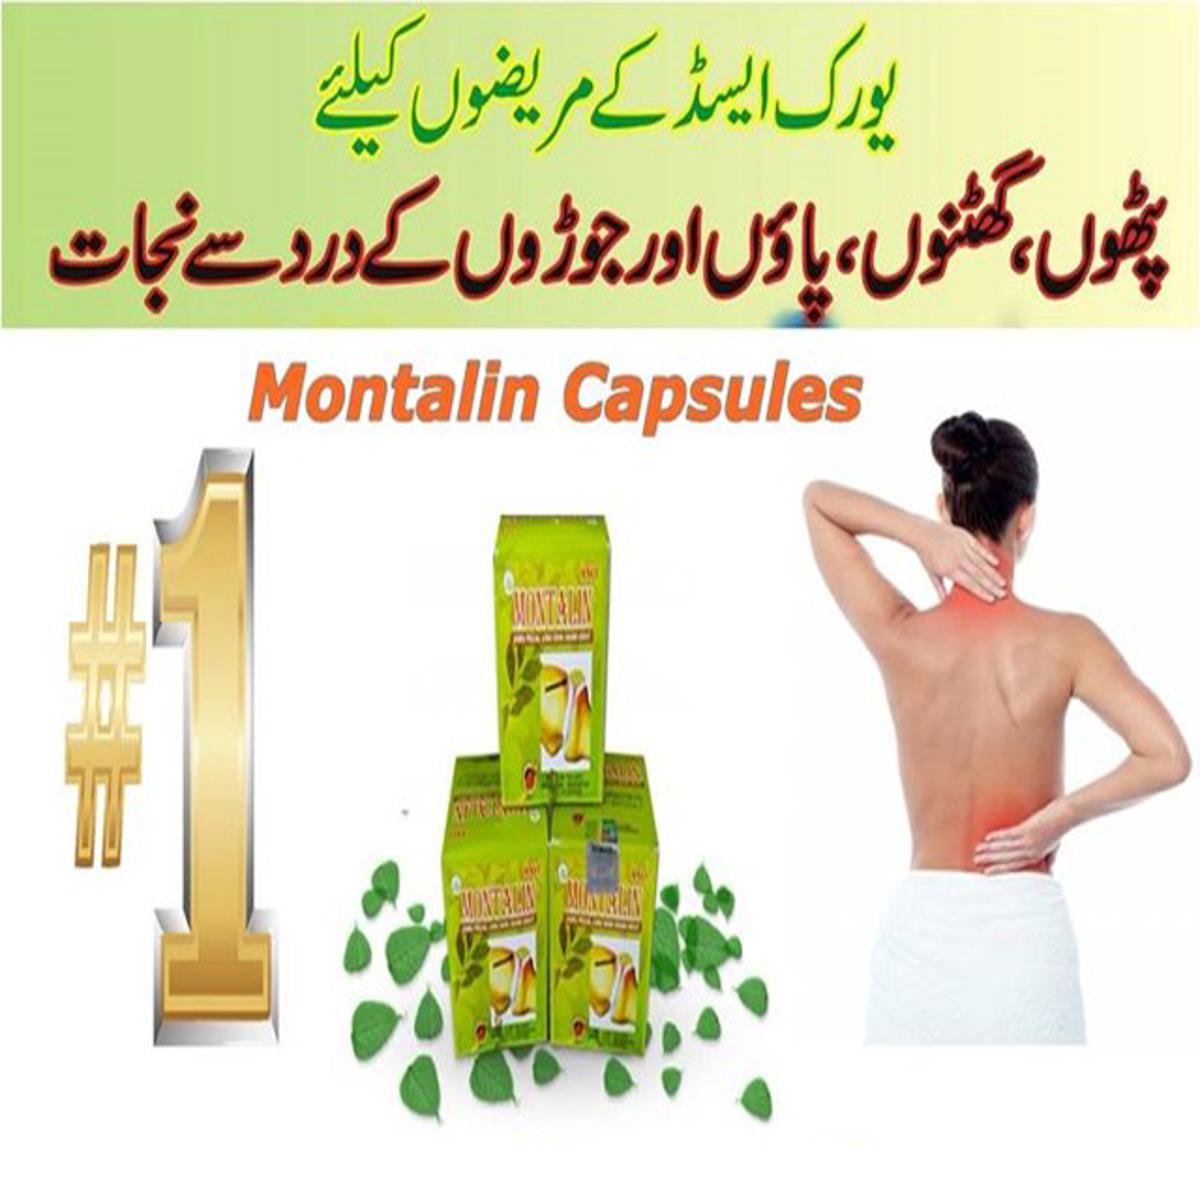 Montalin Capsule Price in Pakistan